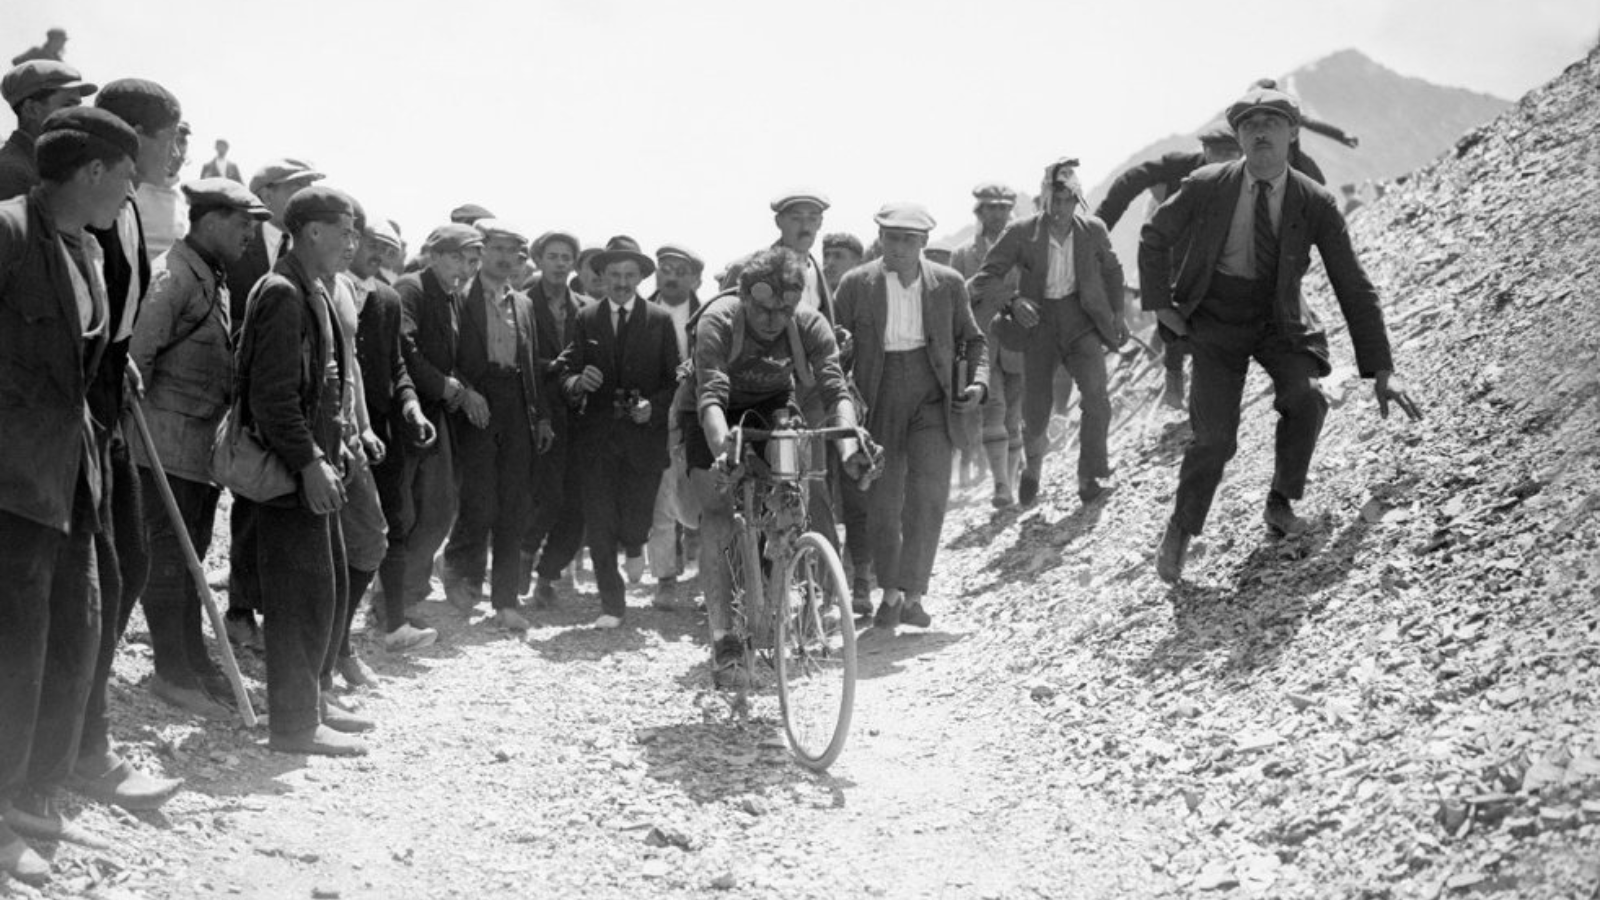 Italian Tour de France winner Ottavio Bottecchia on the Col du Tourmalet surrounded by cheering crowd during the Tour de France in 1824